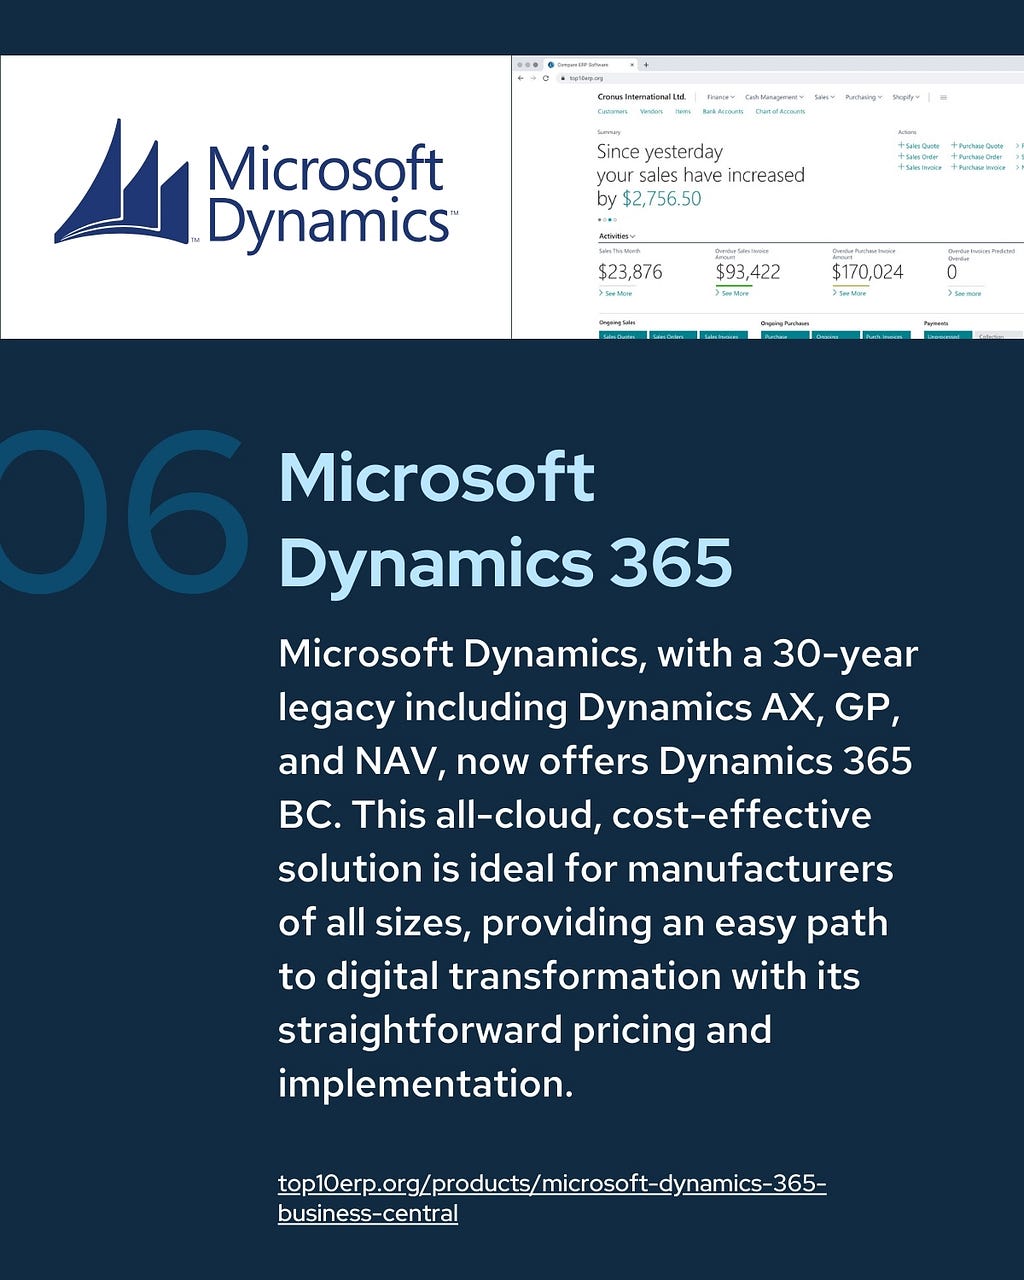 Microsoft Dynamics 365 Features